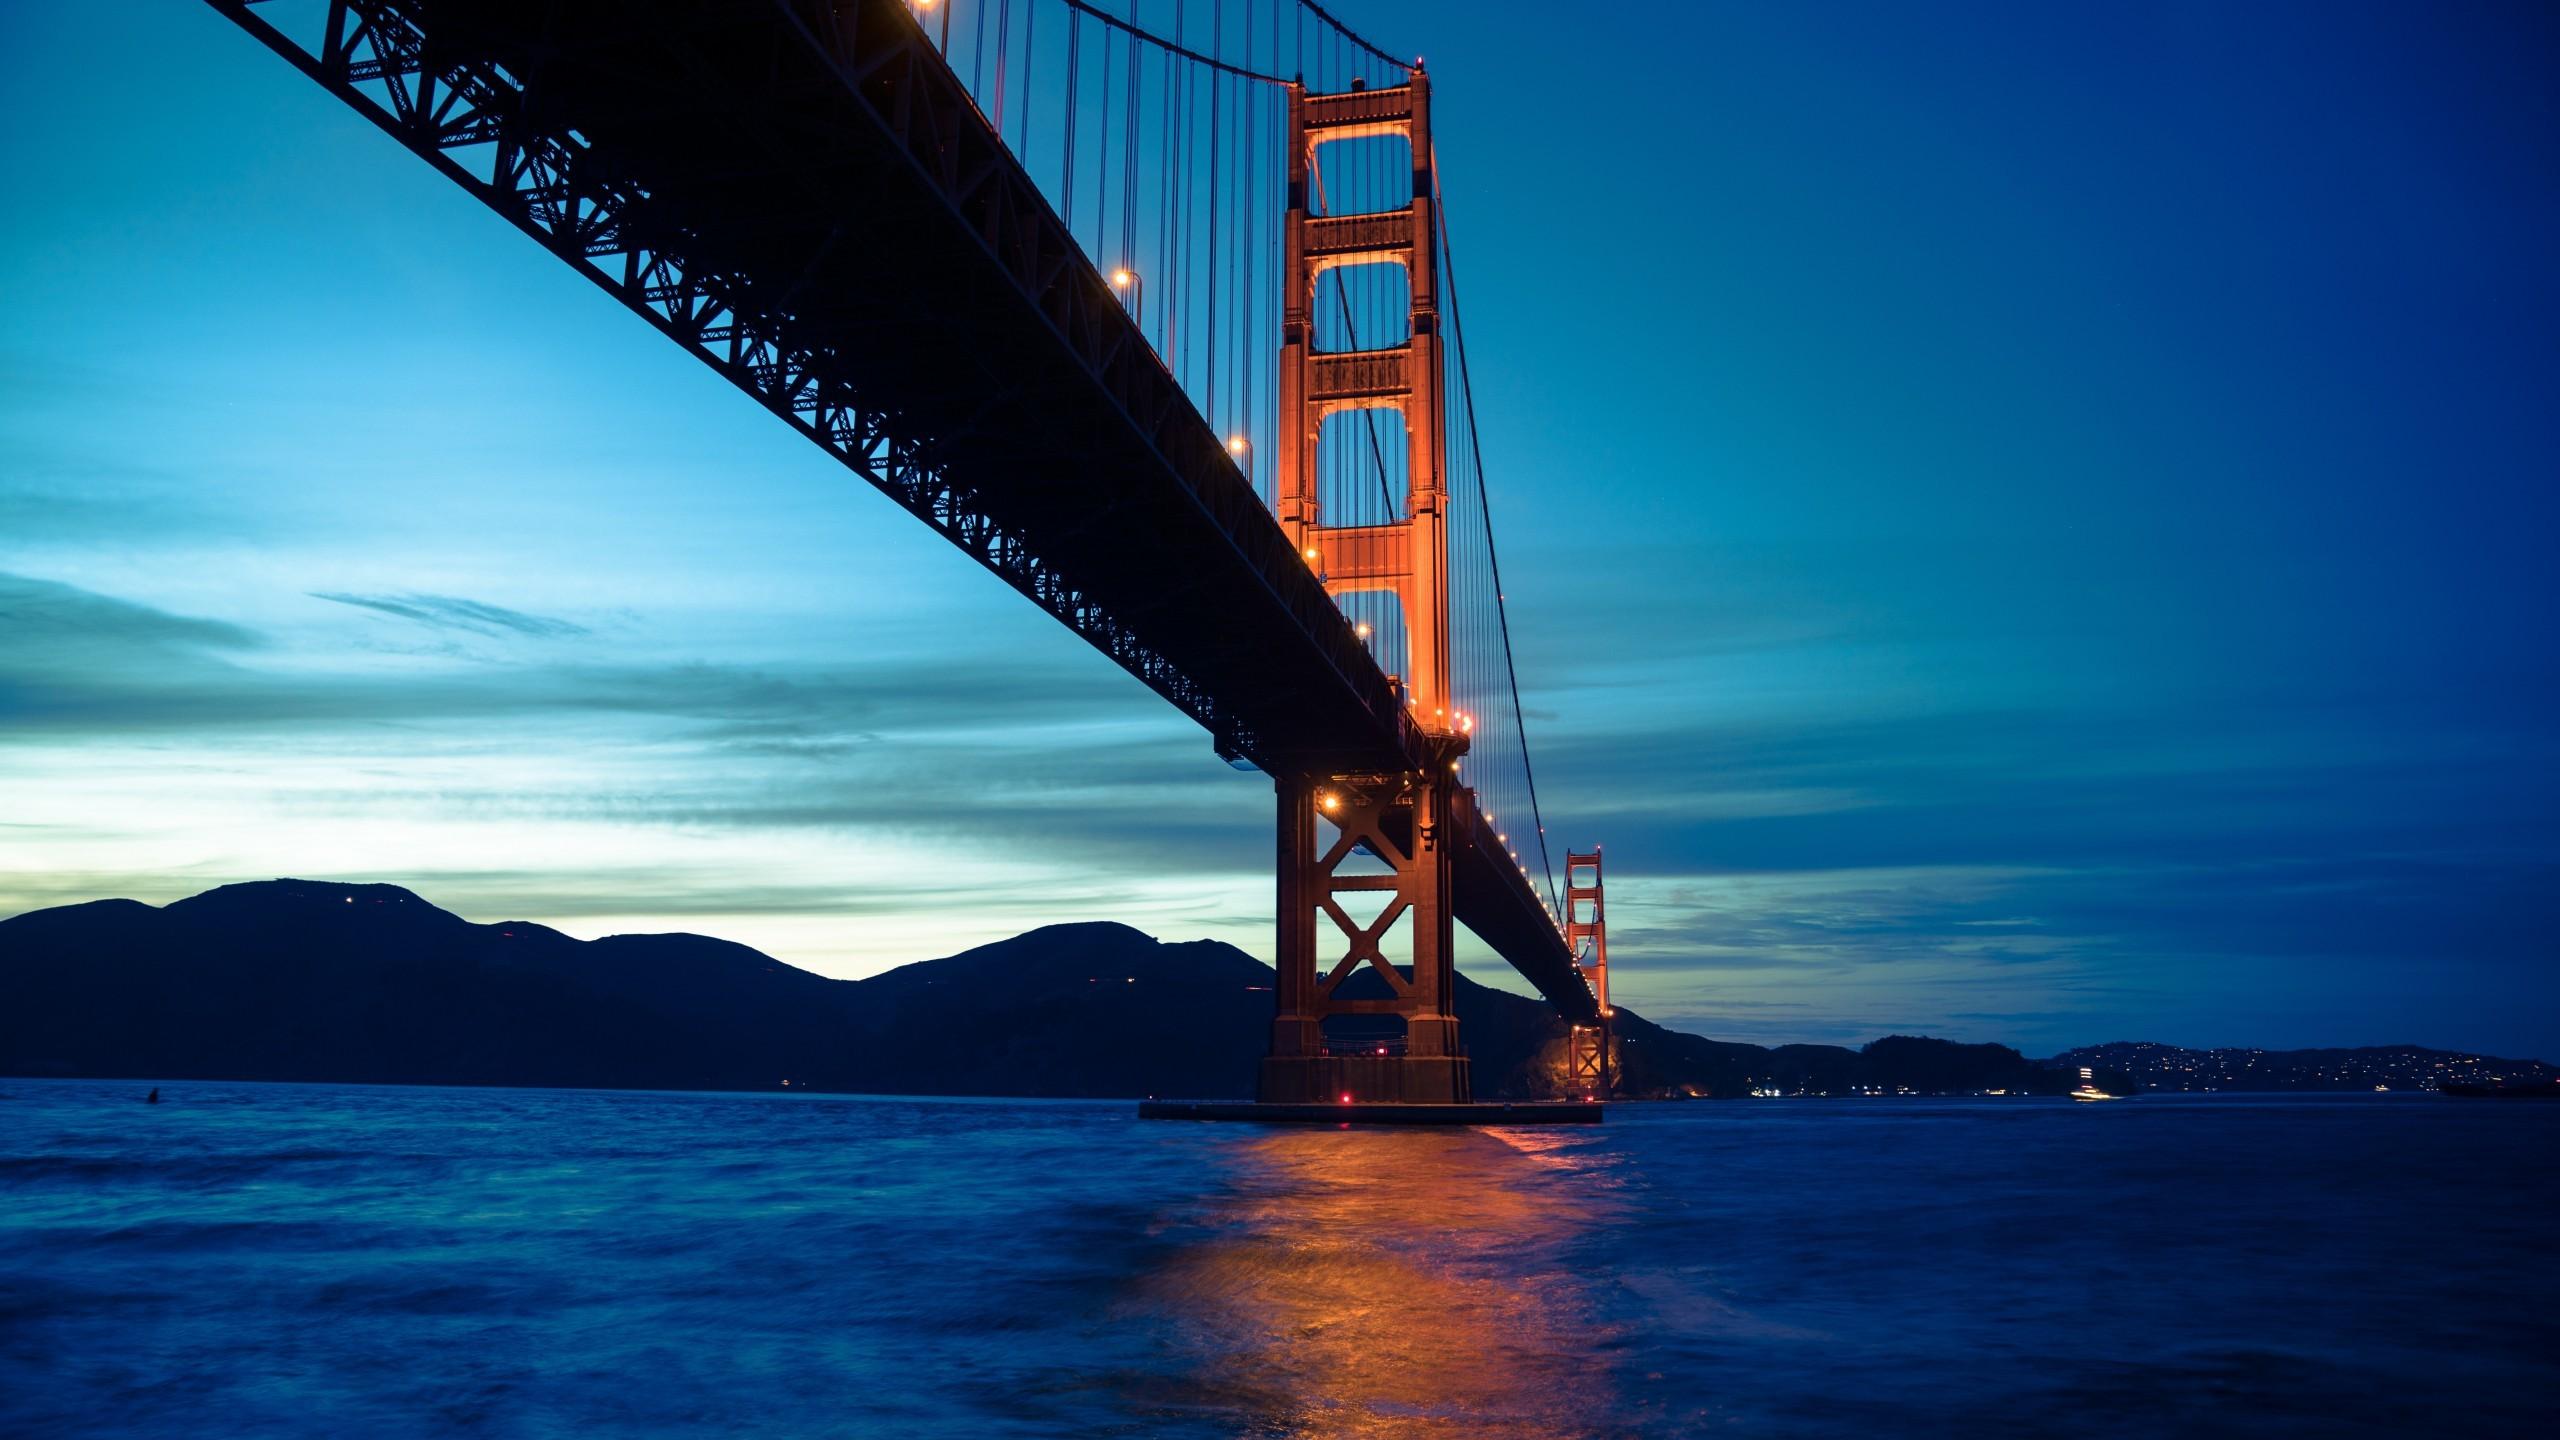 Golden Gate Bridge Wallpaper background picture